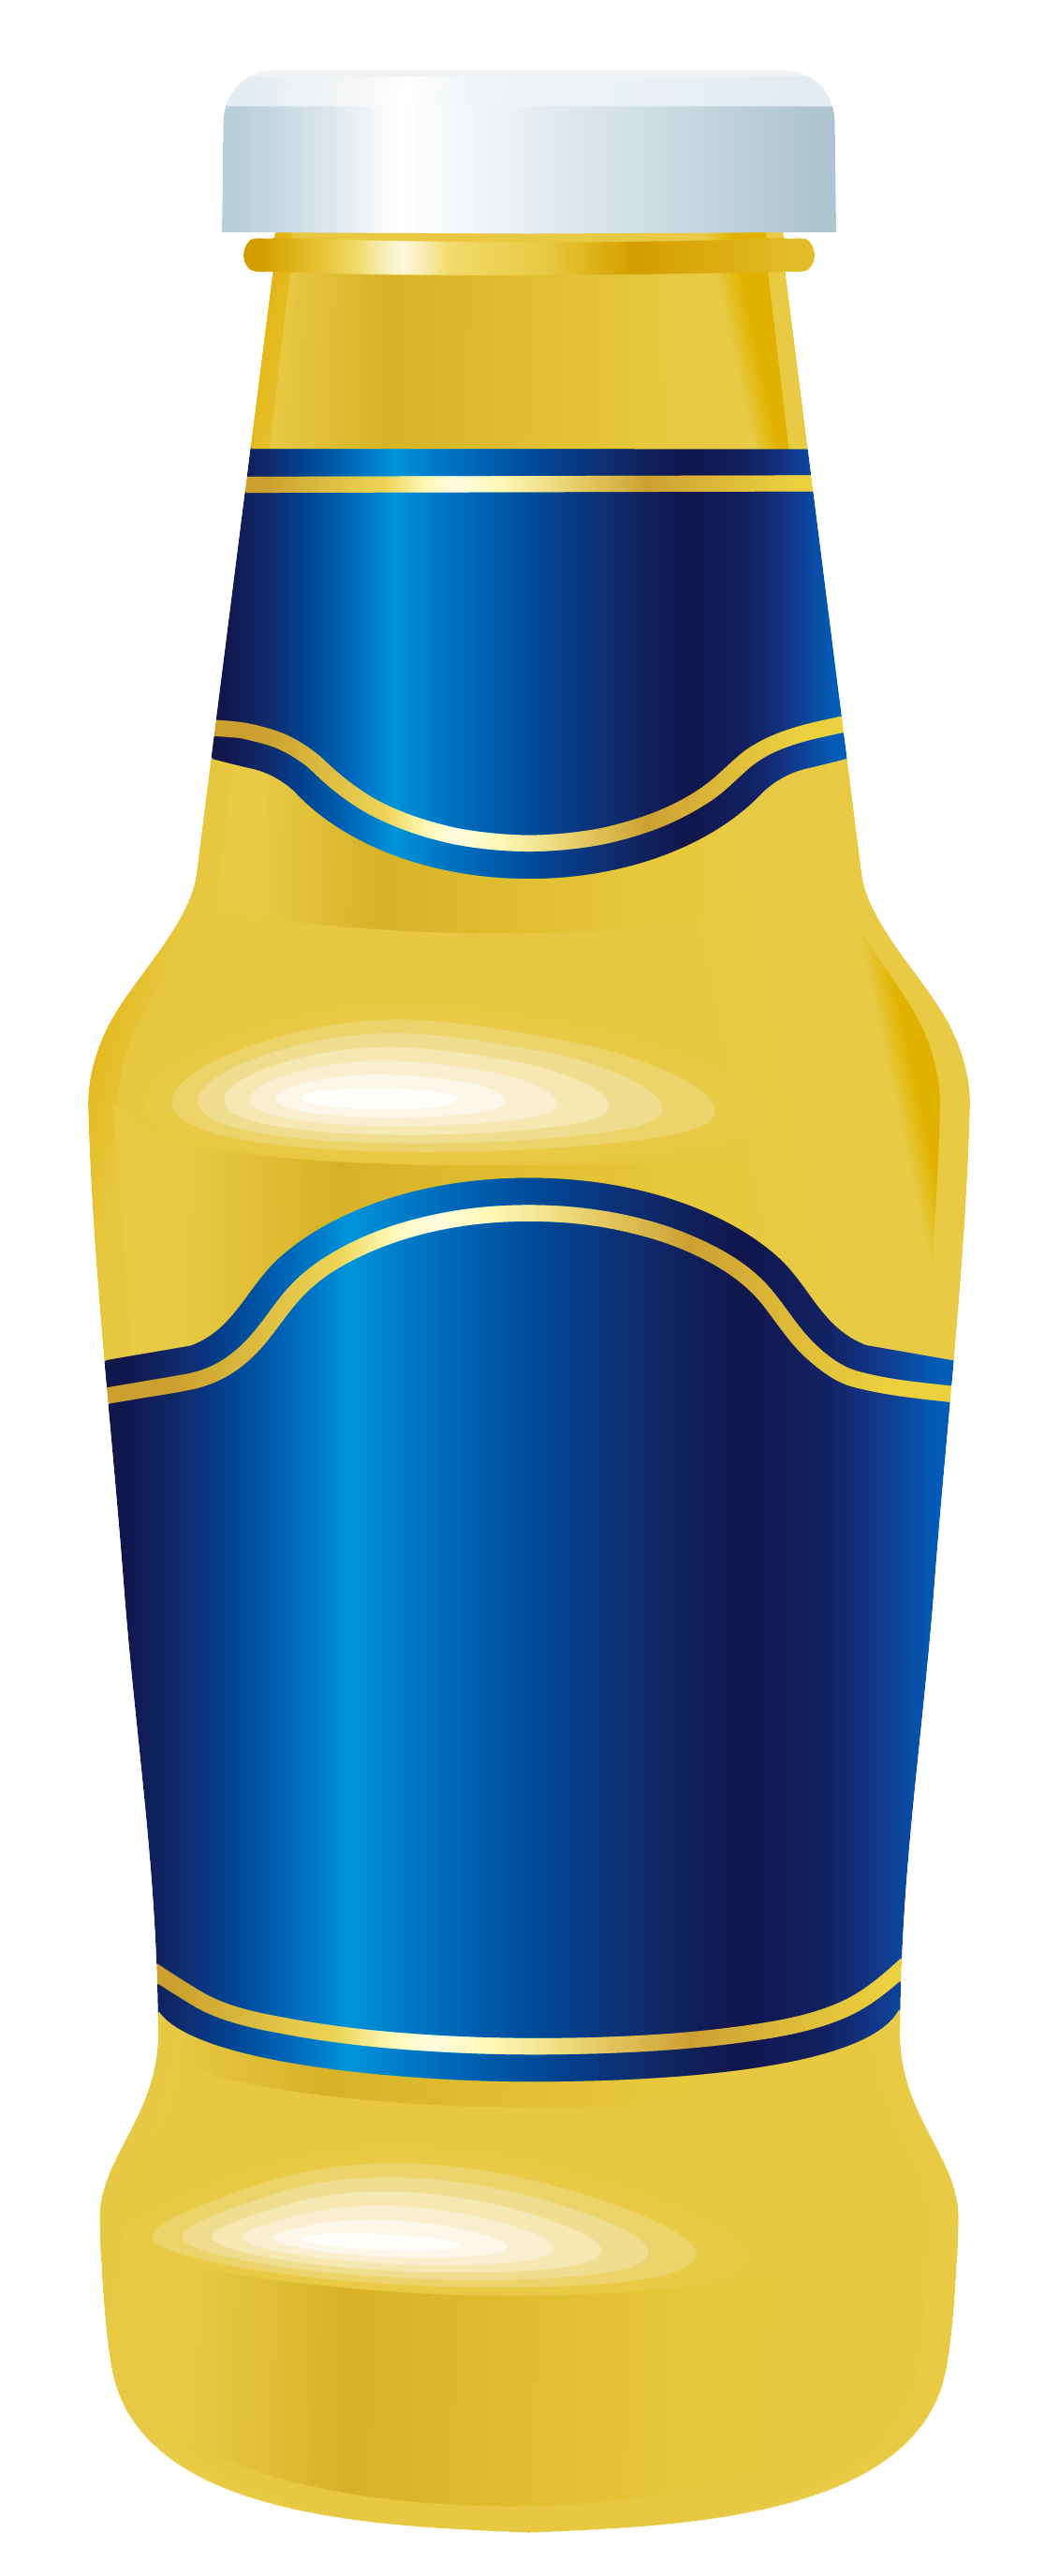 Mustard glass png image. Clipart beach bottle